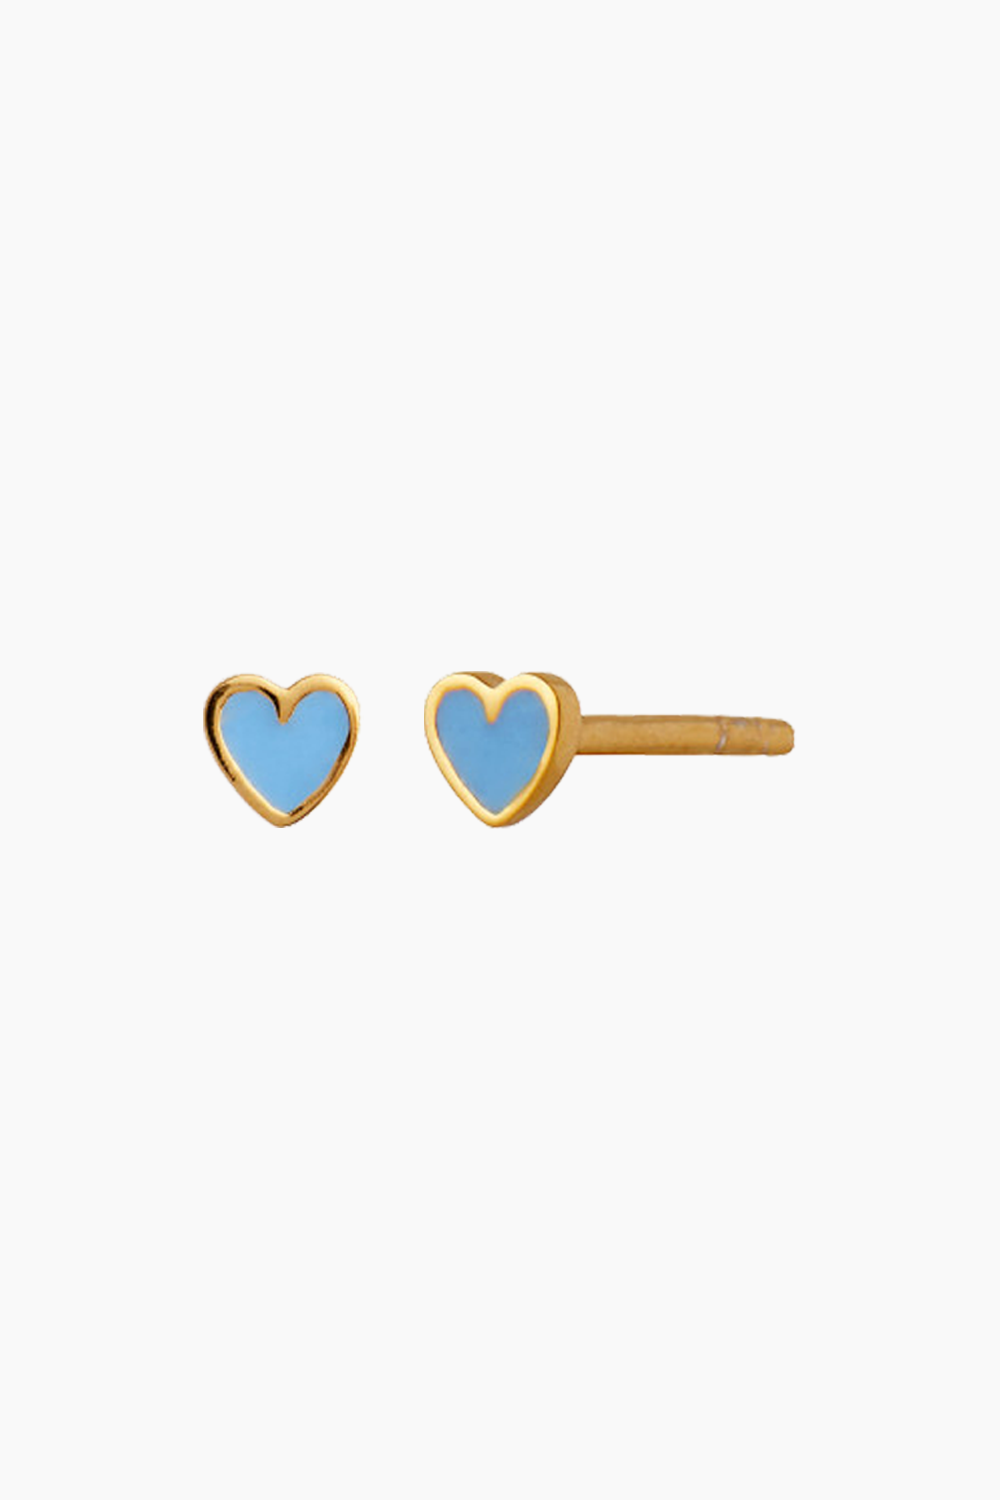 Petit Love Heart Light Blue Enamel - Gold - Stine A